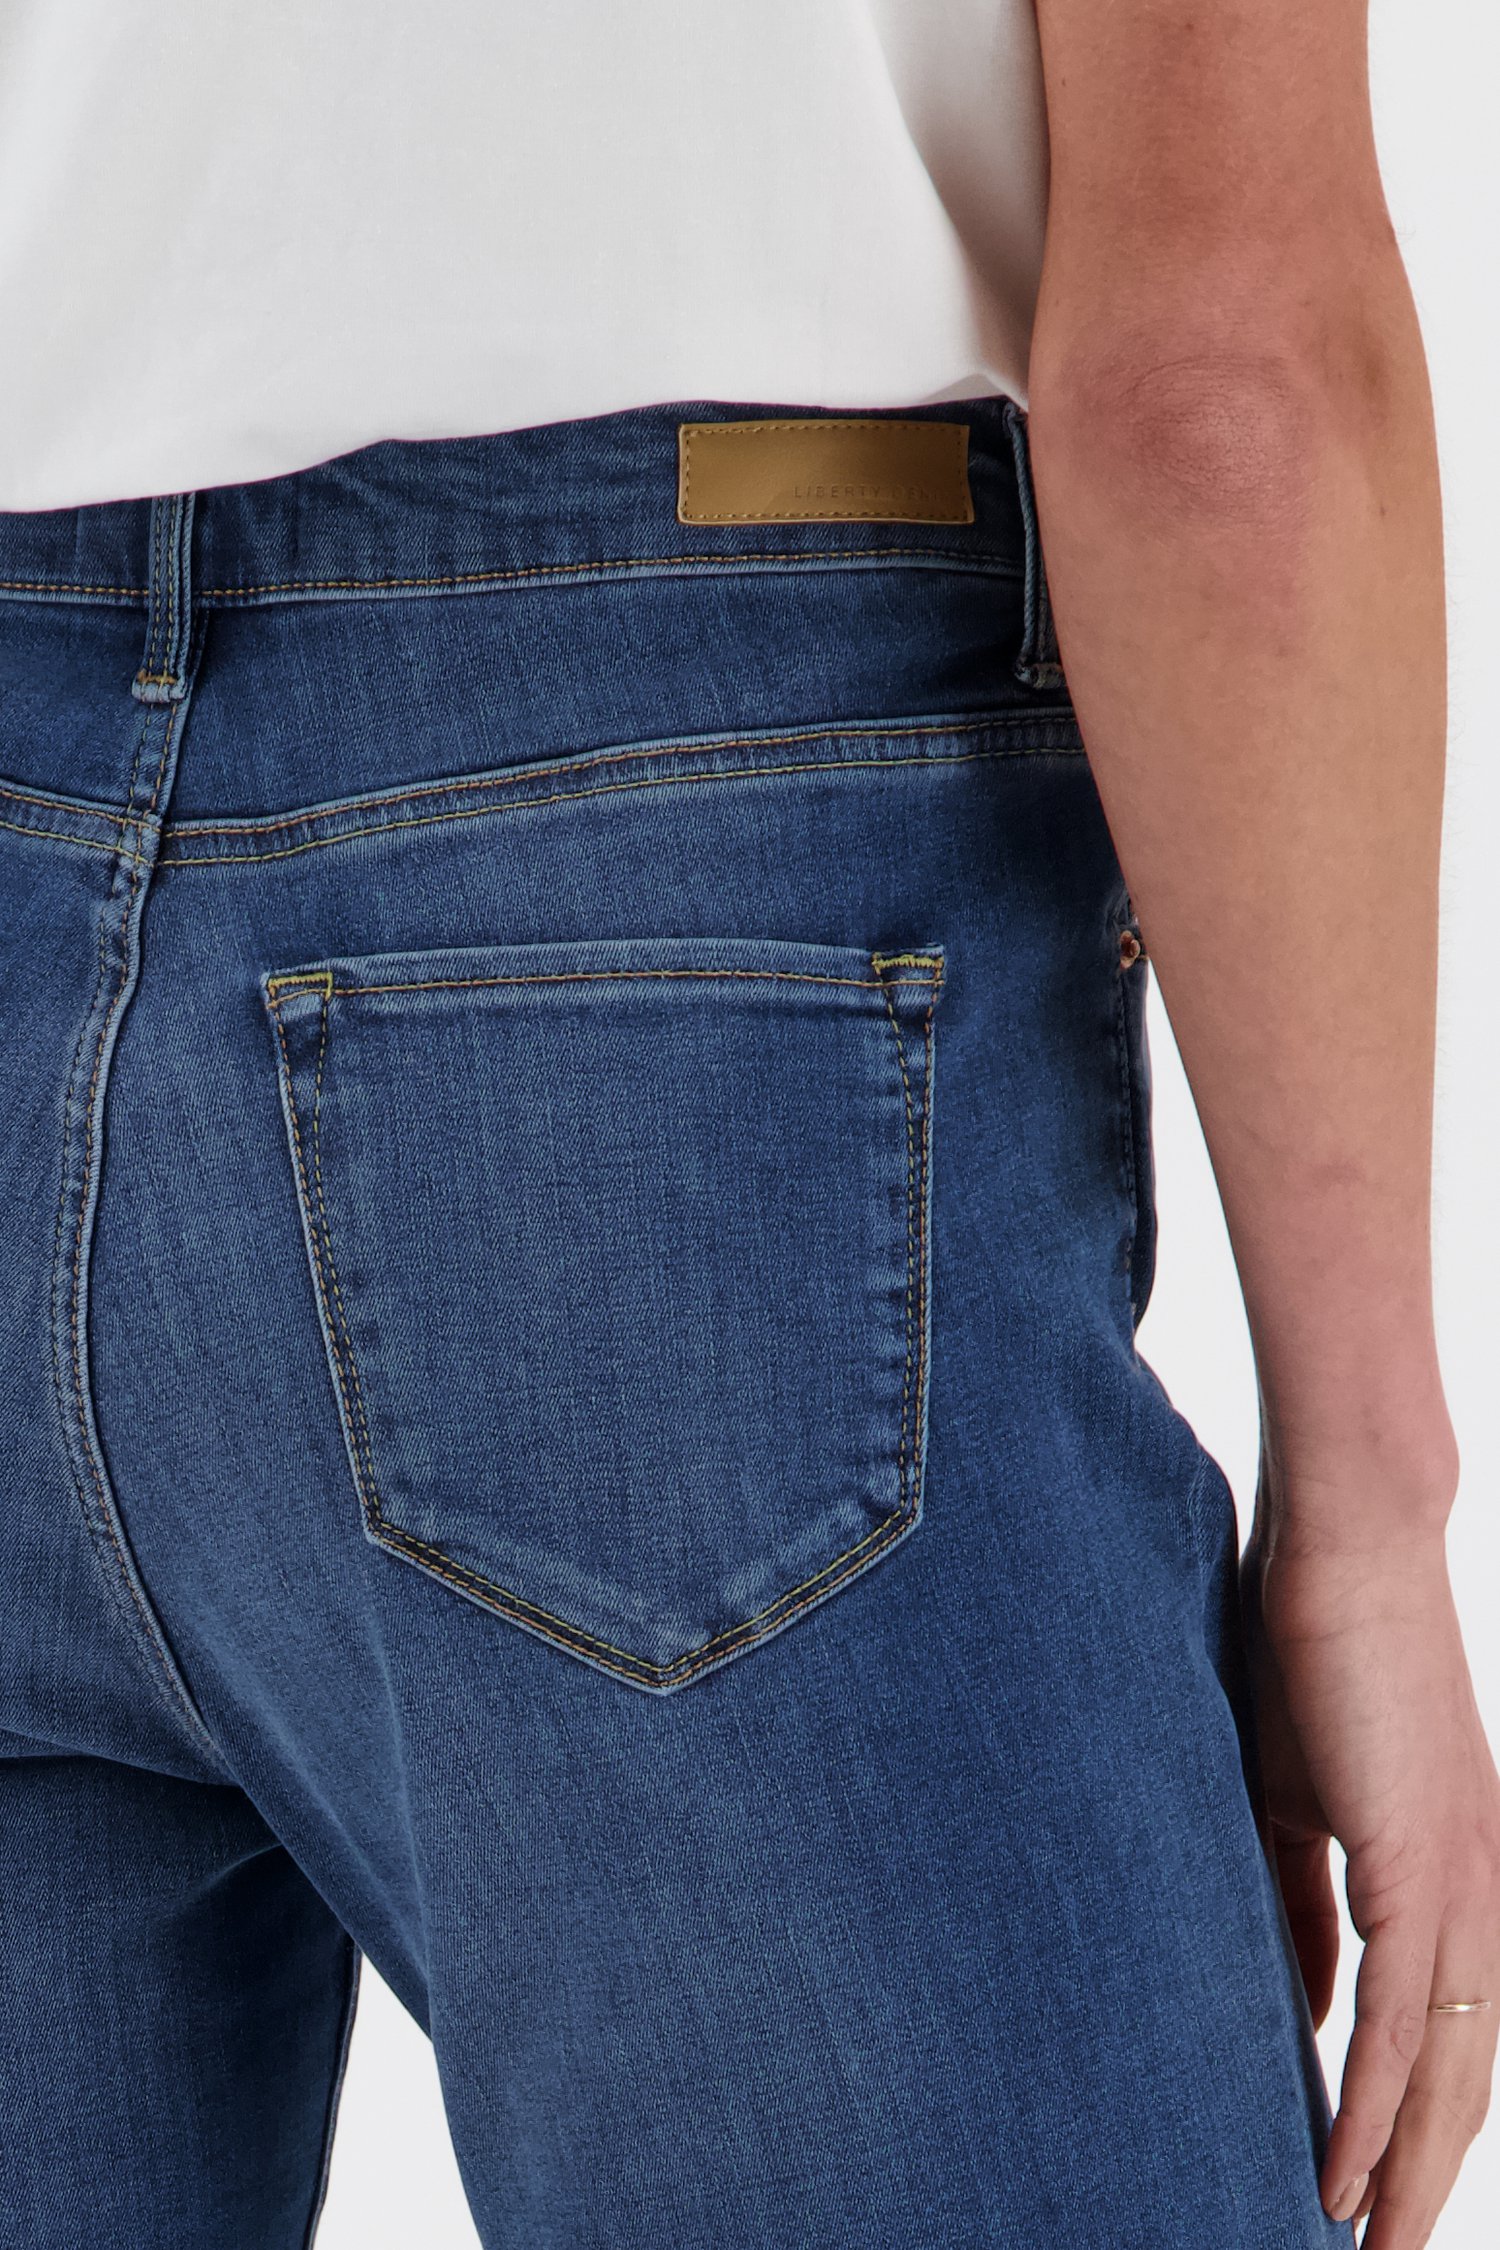 Blauwe jeans - Lily - slim fit - L34 van Liberty Island Denim voor Dames